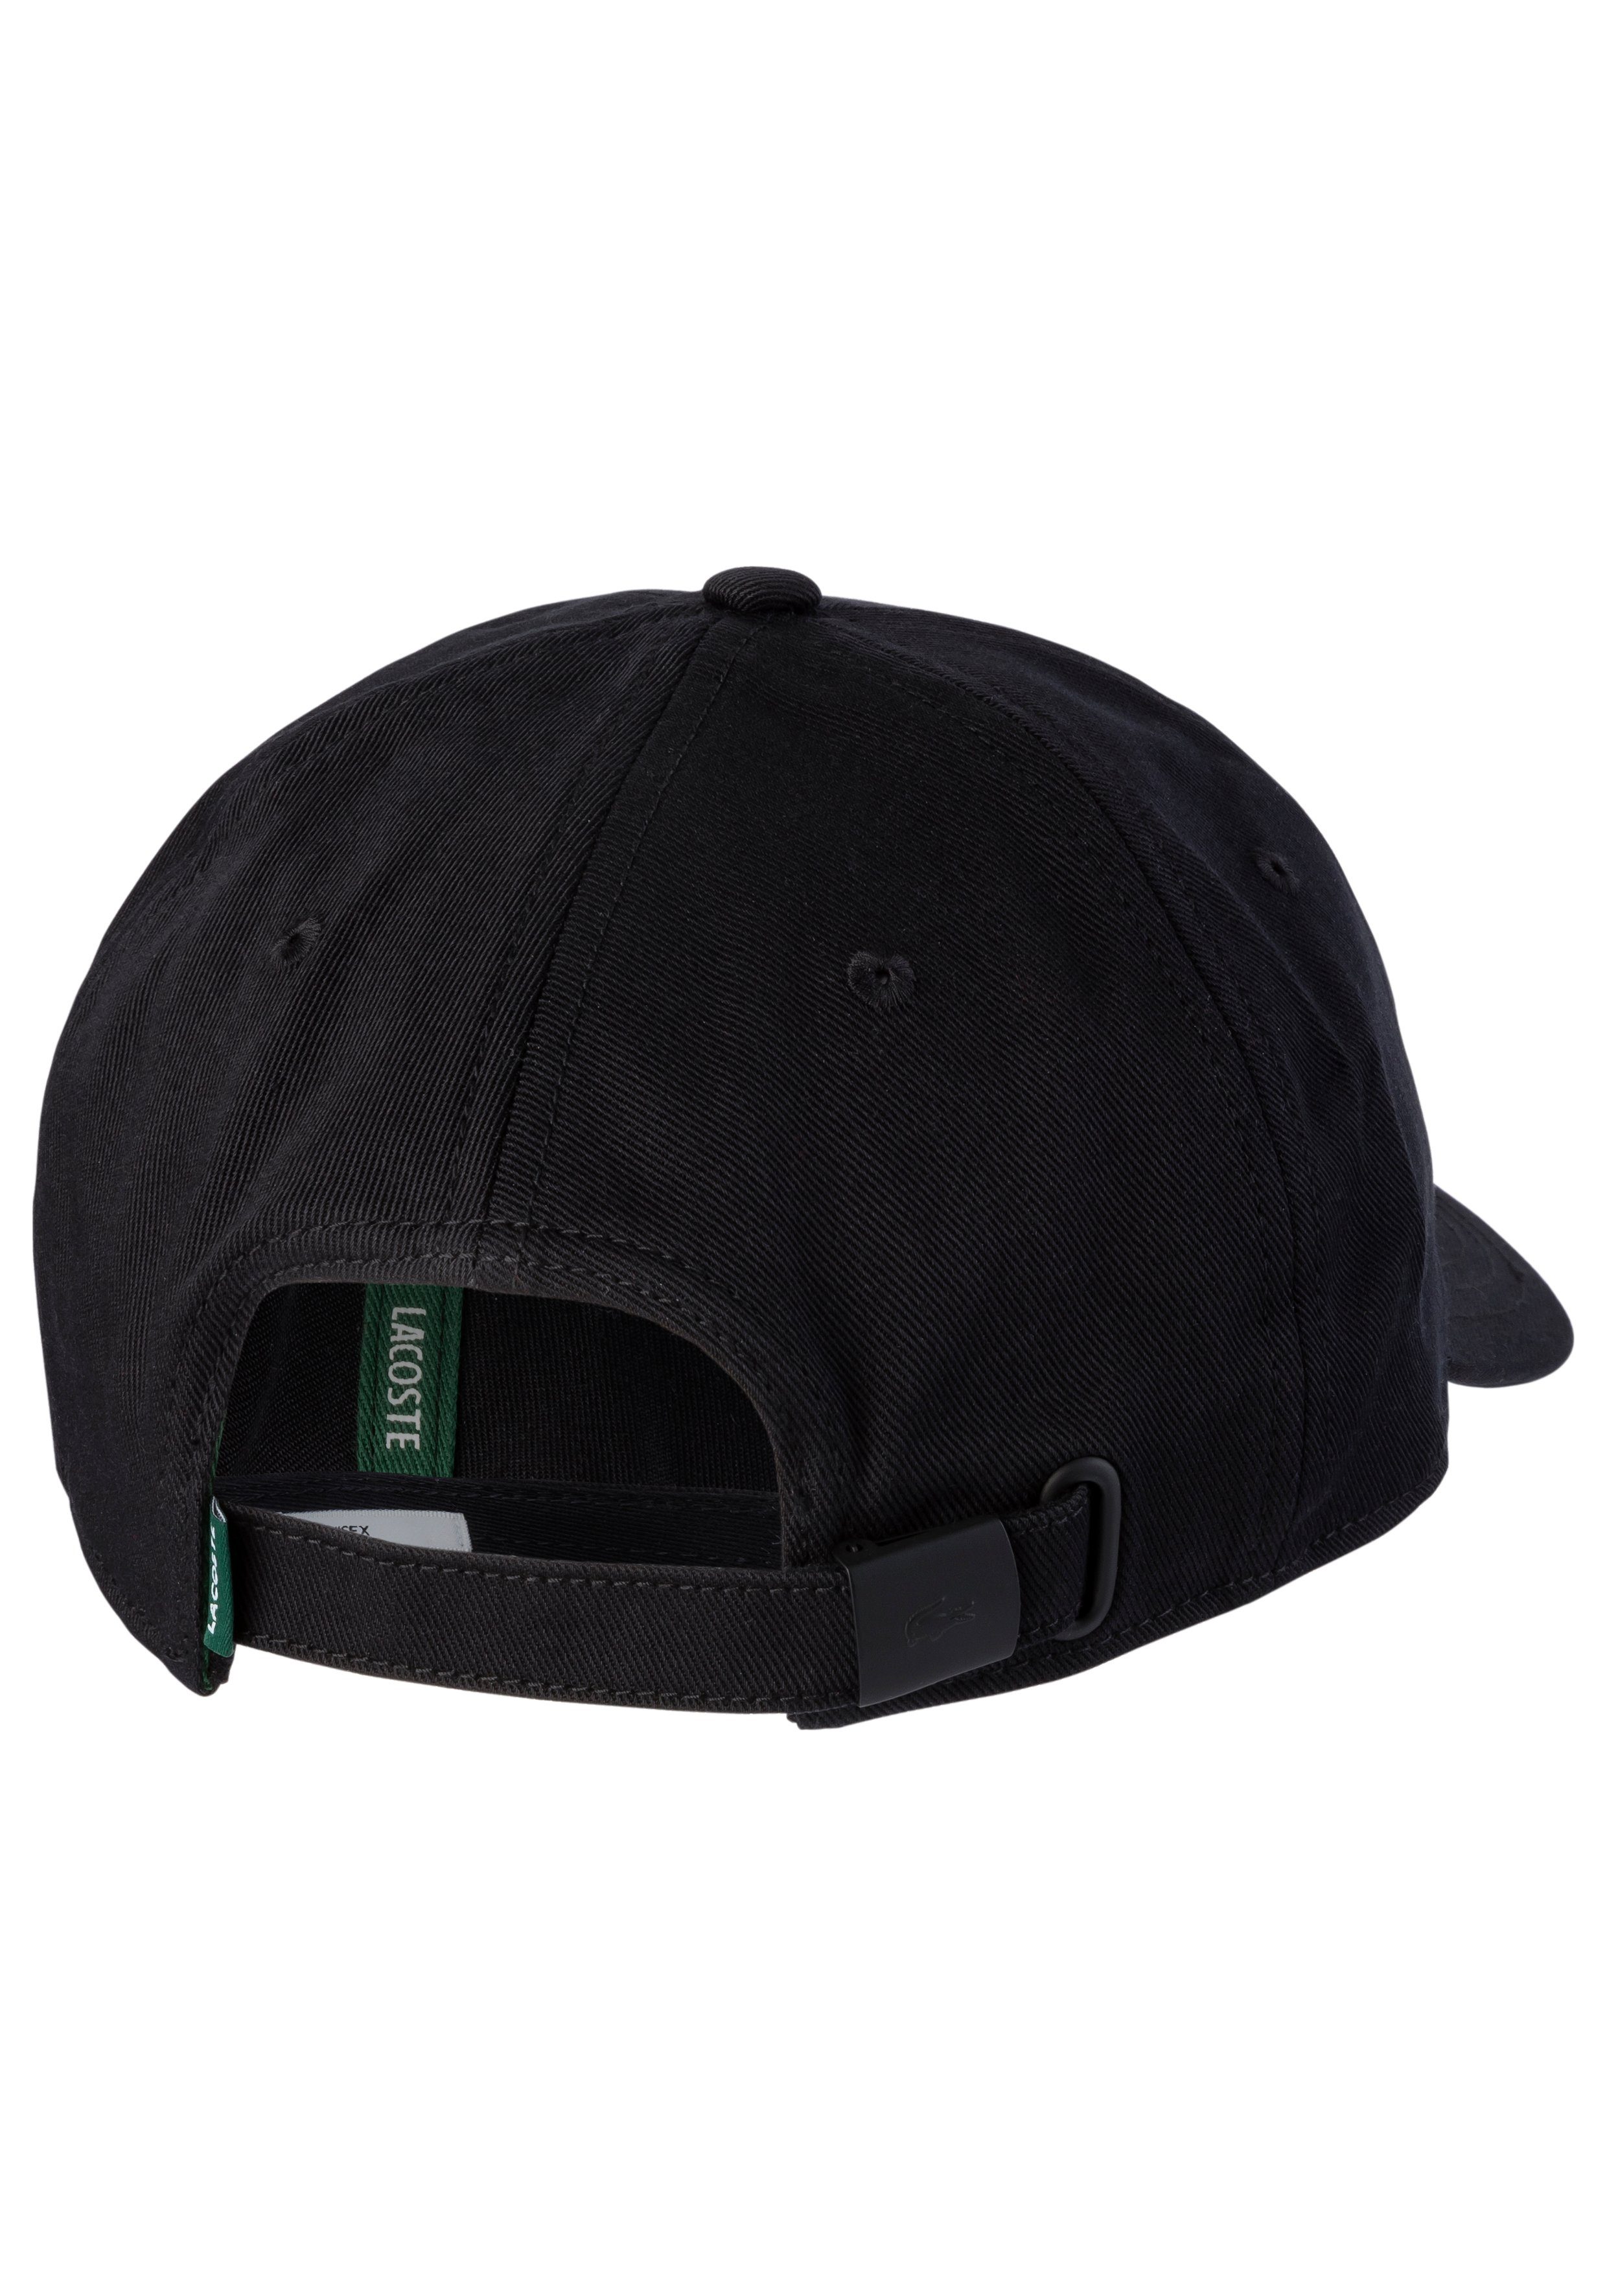 Lacoste Baseball Cap mit XL Logo schwarz | Baseball Caps